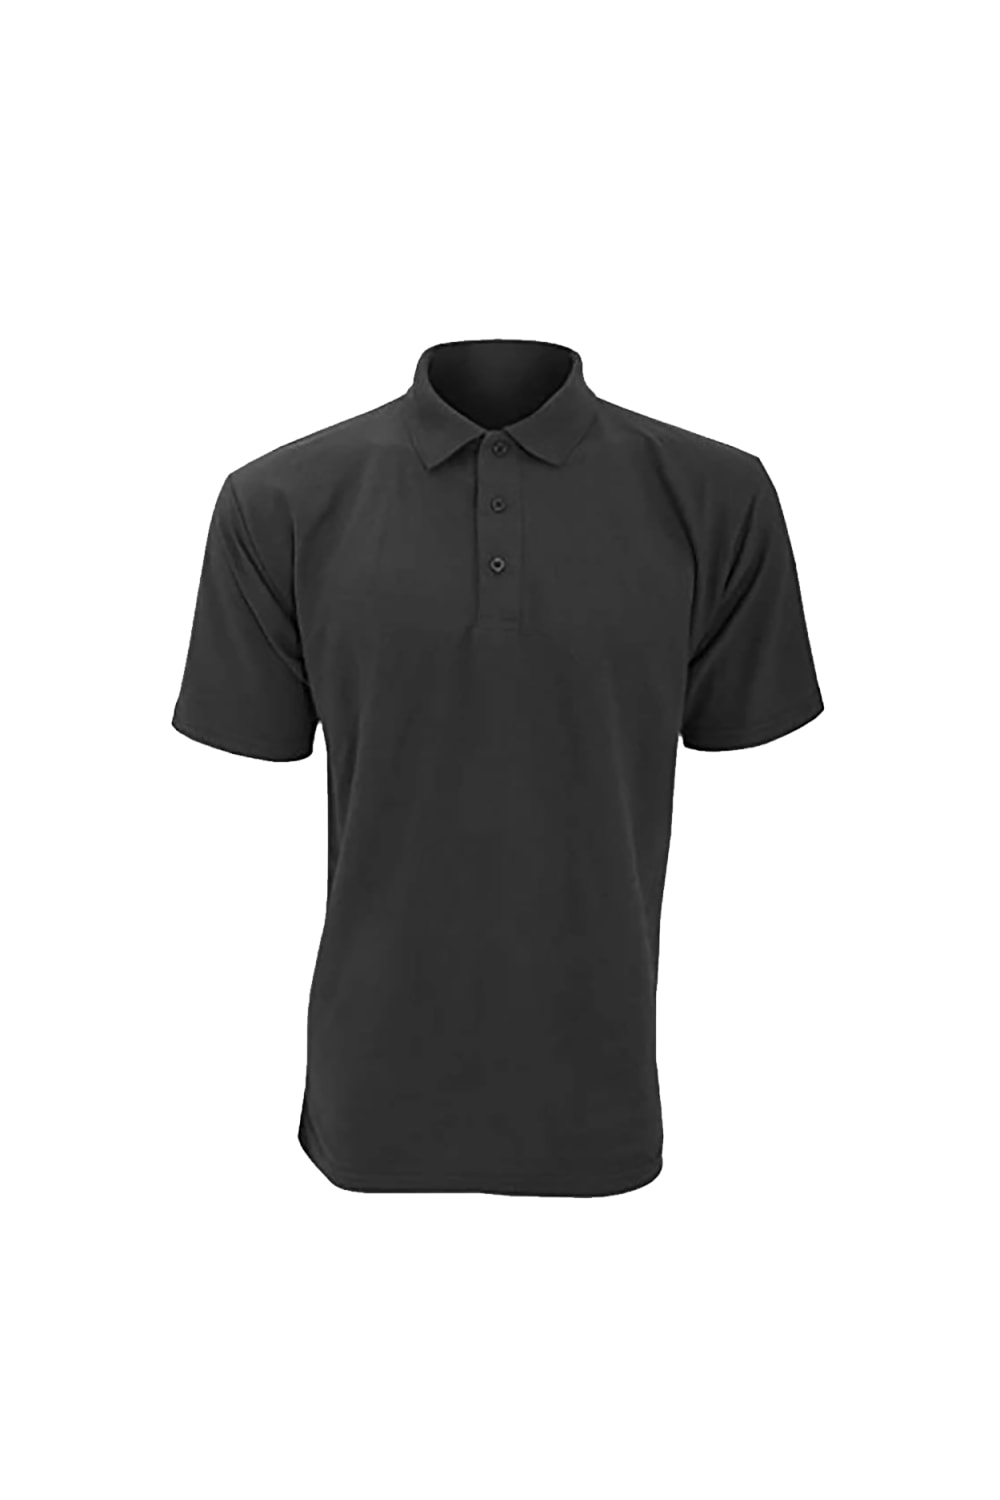 UCC 50/50 Mens Heavweight Plain Pique Short Sleeve Polo Shirt (Charcoal)